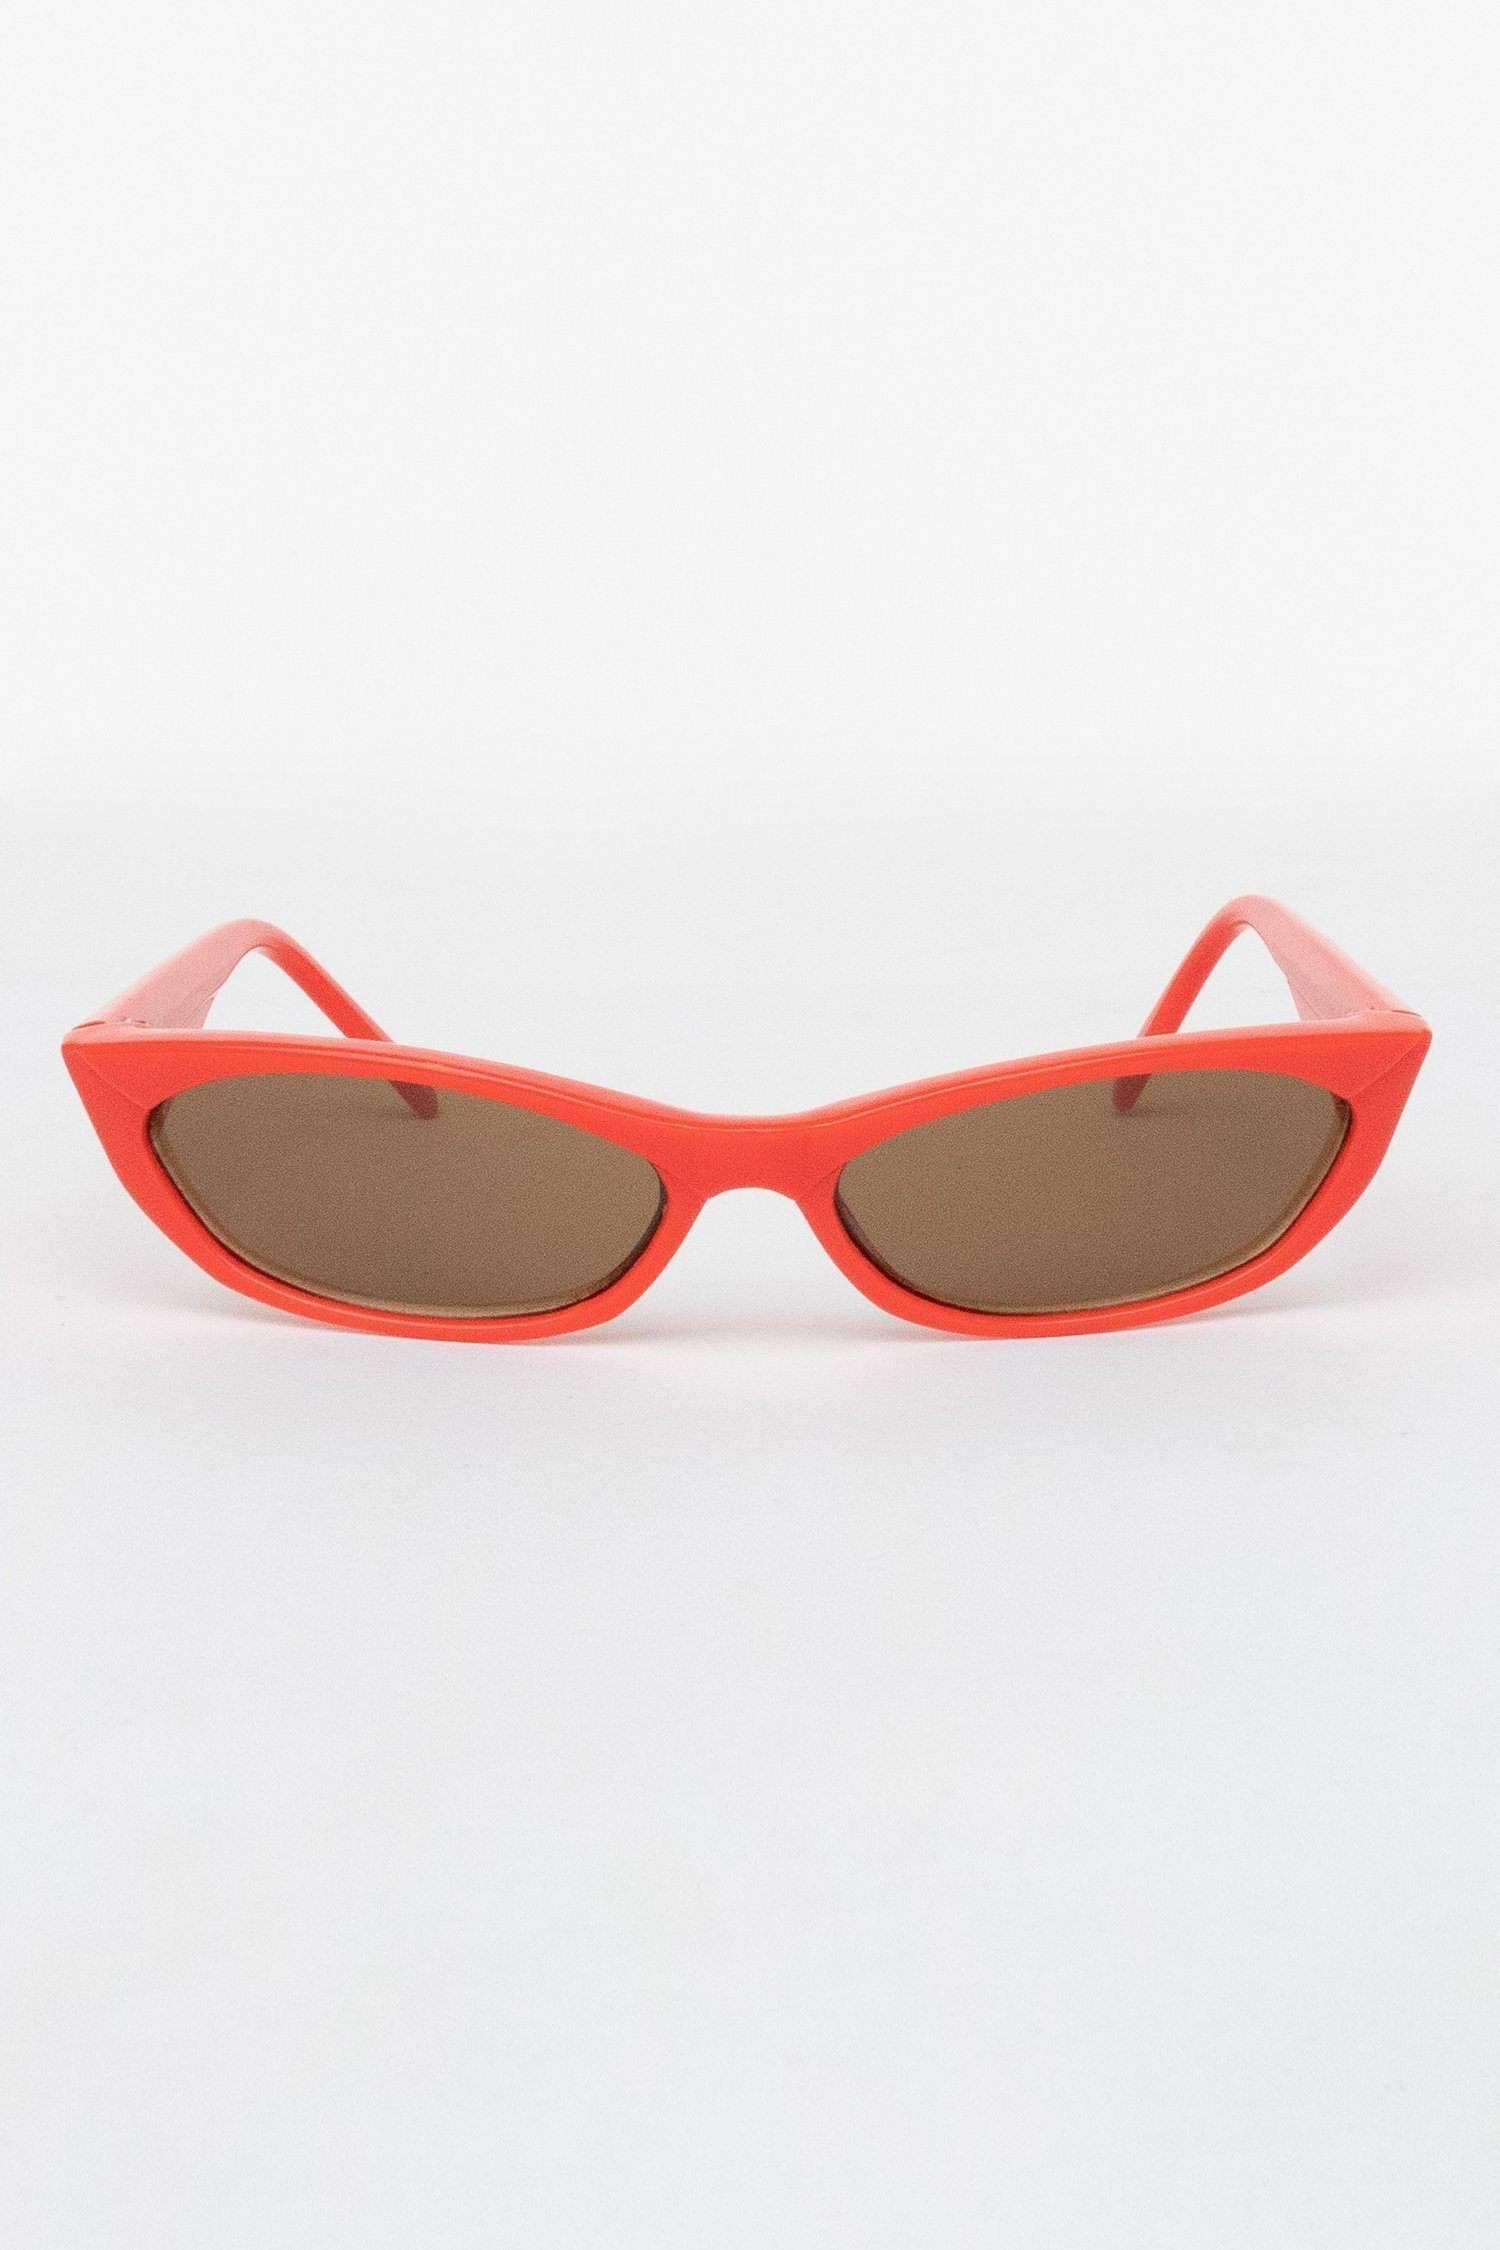 SGSKCAT - Katya Skinny Cat Eye Sunglasses Sunglasses Los Angeles Apparel Red OS 